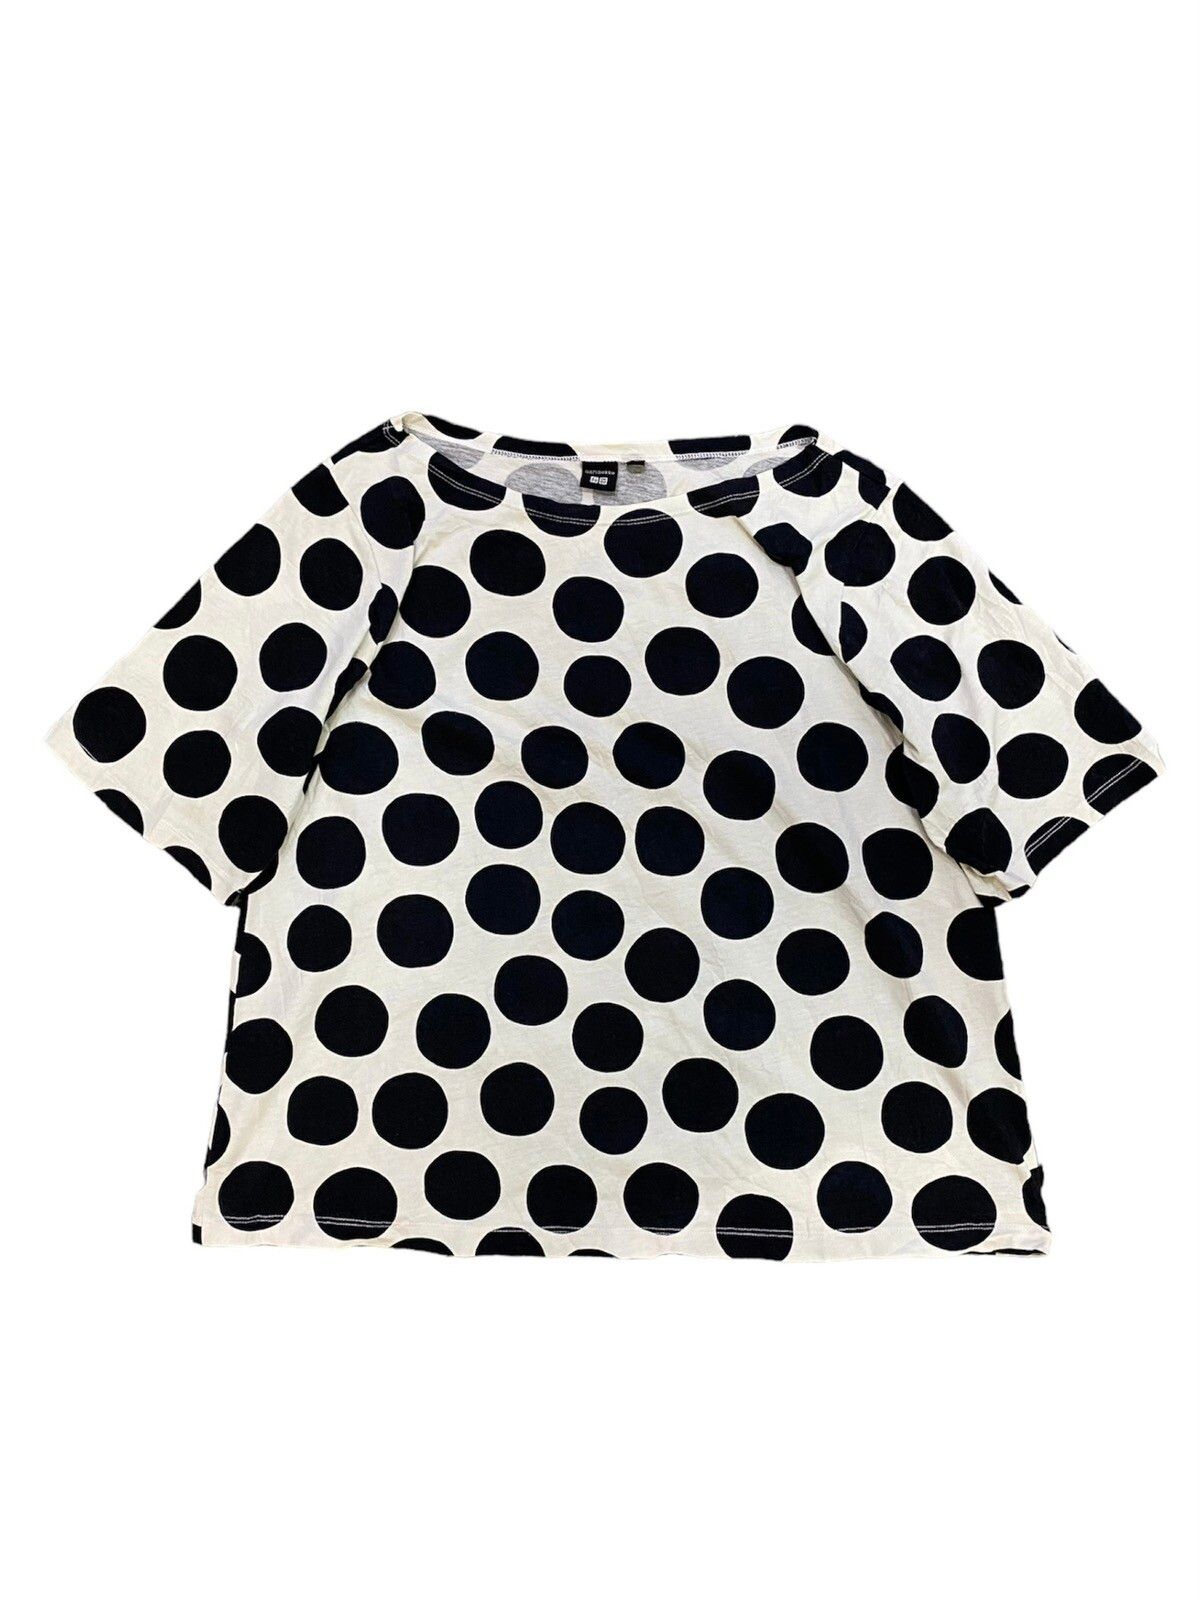 Marimekko X Uniqlo Polka Dot T-Shirt - 1